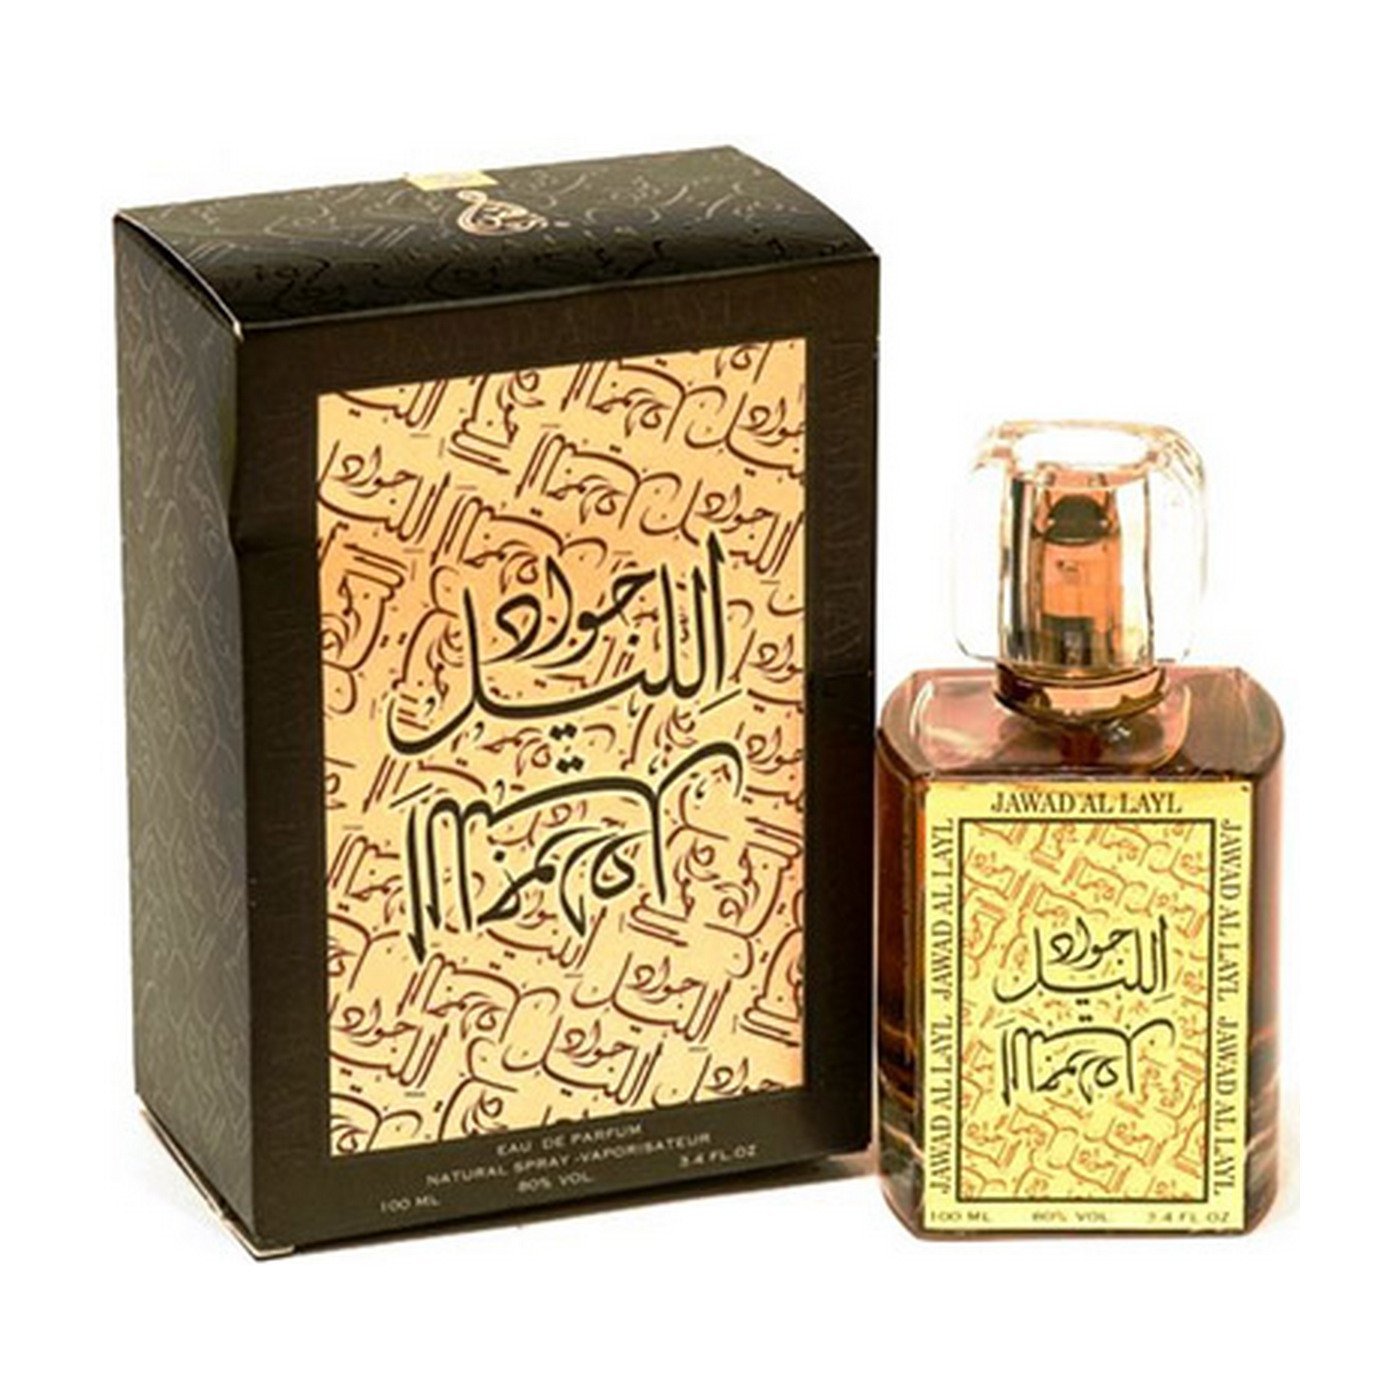 Арабские женские духи. Парфюм Jawad al Layl. Джавад Кхалис духи. Khalis Jawad al Layl Gold парфюмерная вода 100 мл. Масляные духи Khalis Perfumes Jawad.